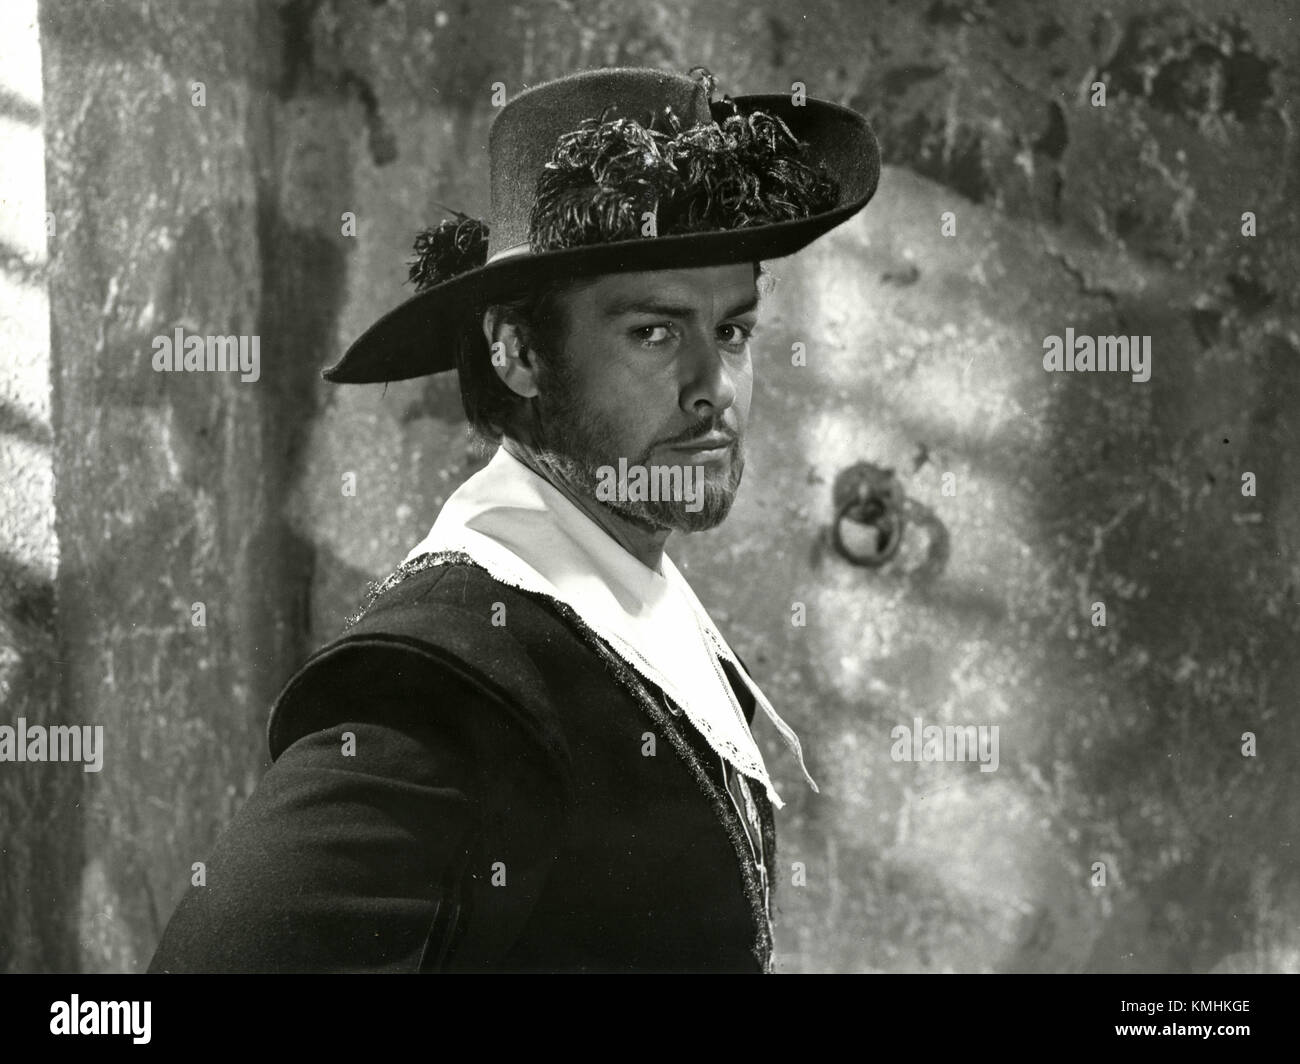 Actor Livio Lorenzon in the movie Zorro and the Three Musketeers, Italy 1963 Stock Photo